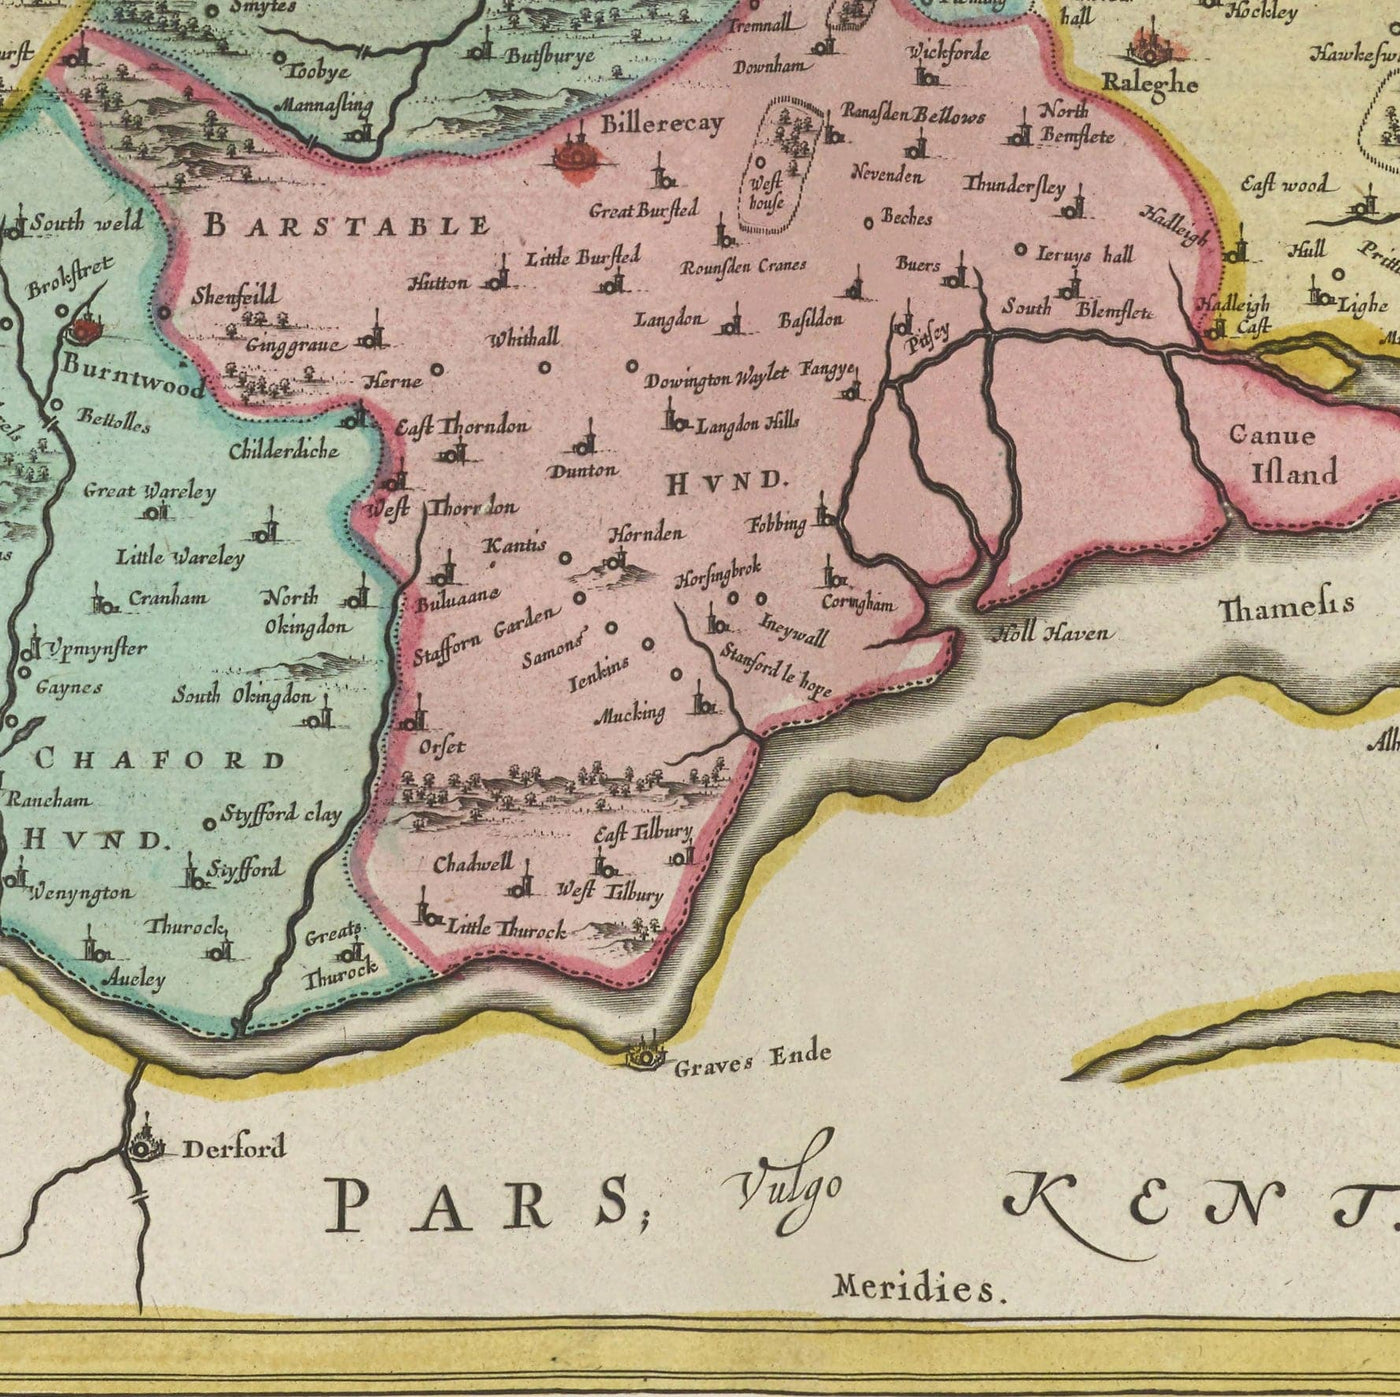 Mapa antiguo de Essex, 1665 por Joan Blaeu - Southend, Colchester, Chelmsford, Basildon, Romford, Braintree, Norte de Londres